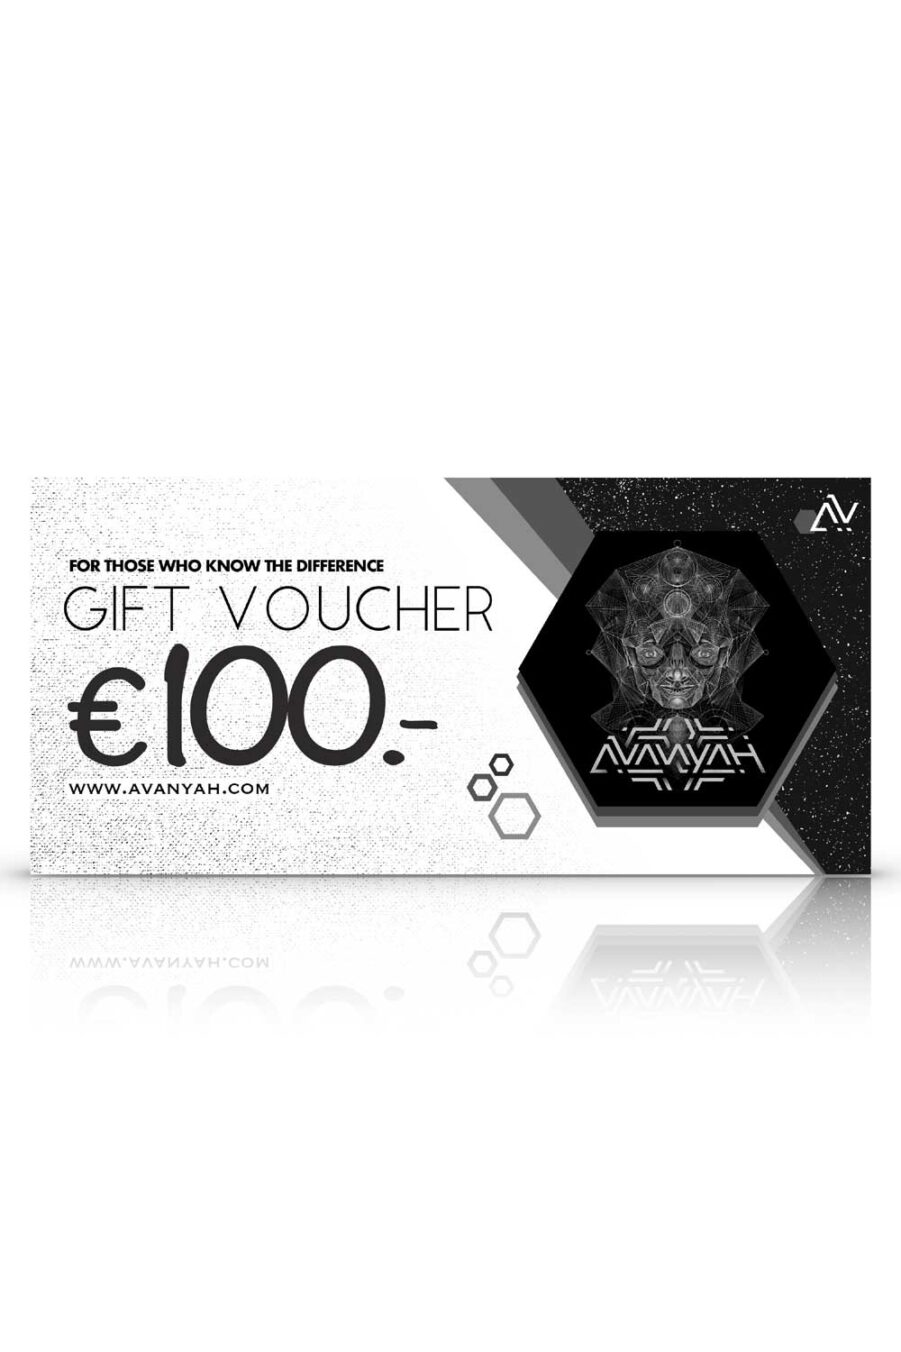 100 € Gift card in Avanyah's online fashion store